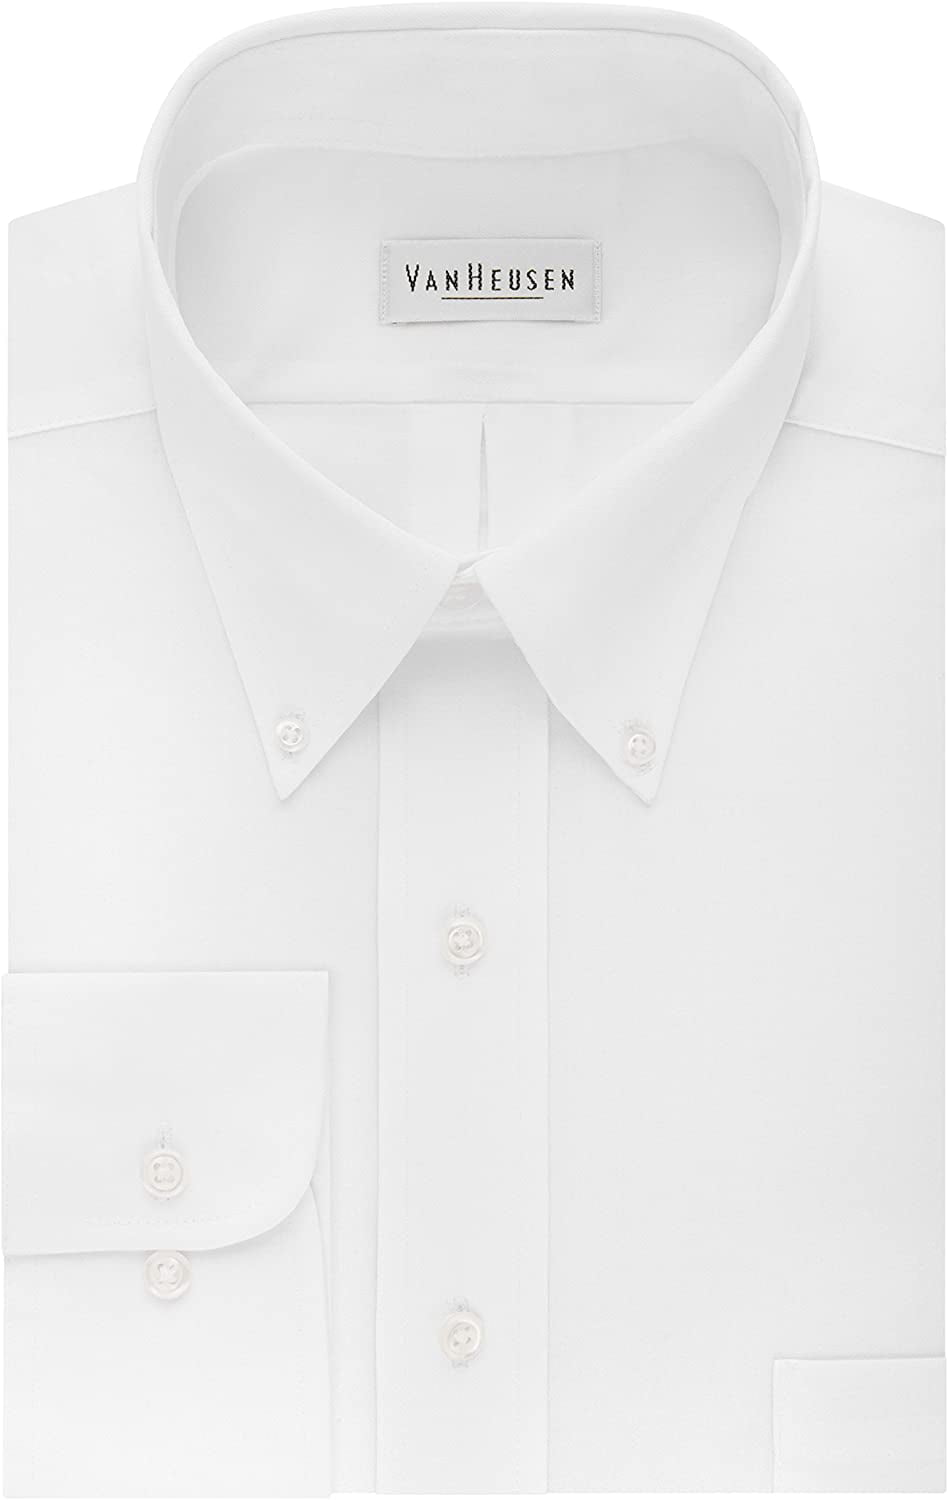 van heusen button down collar shirts